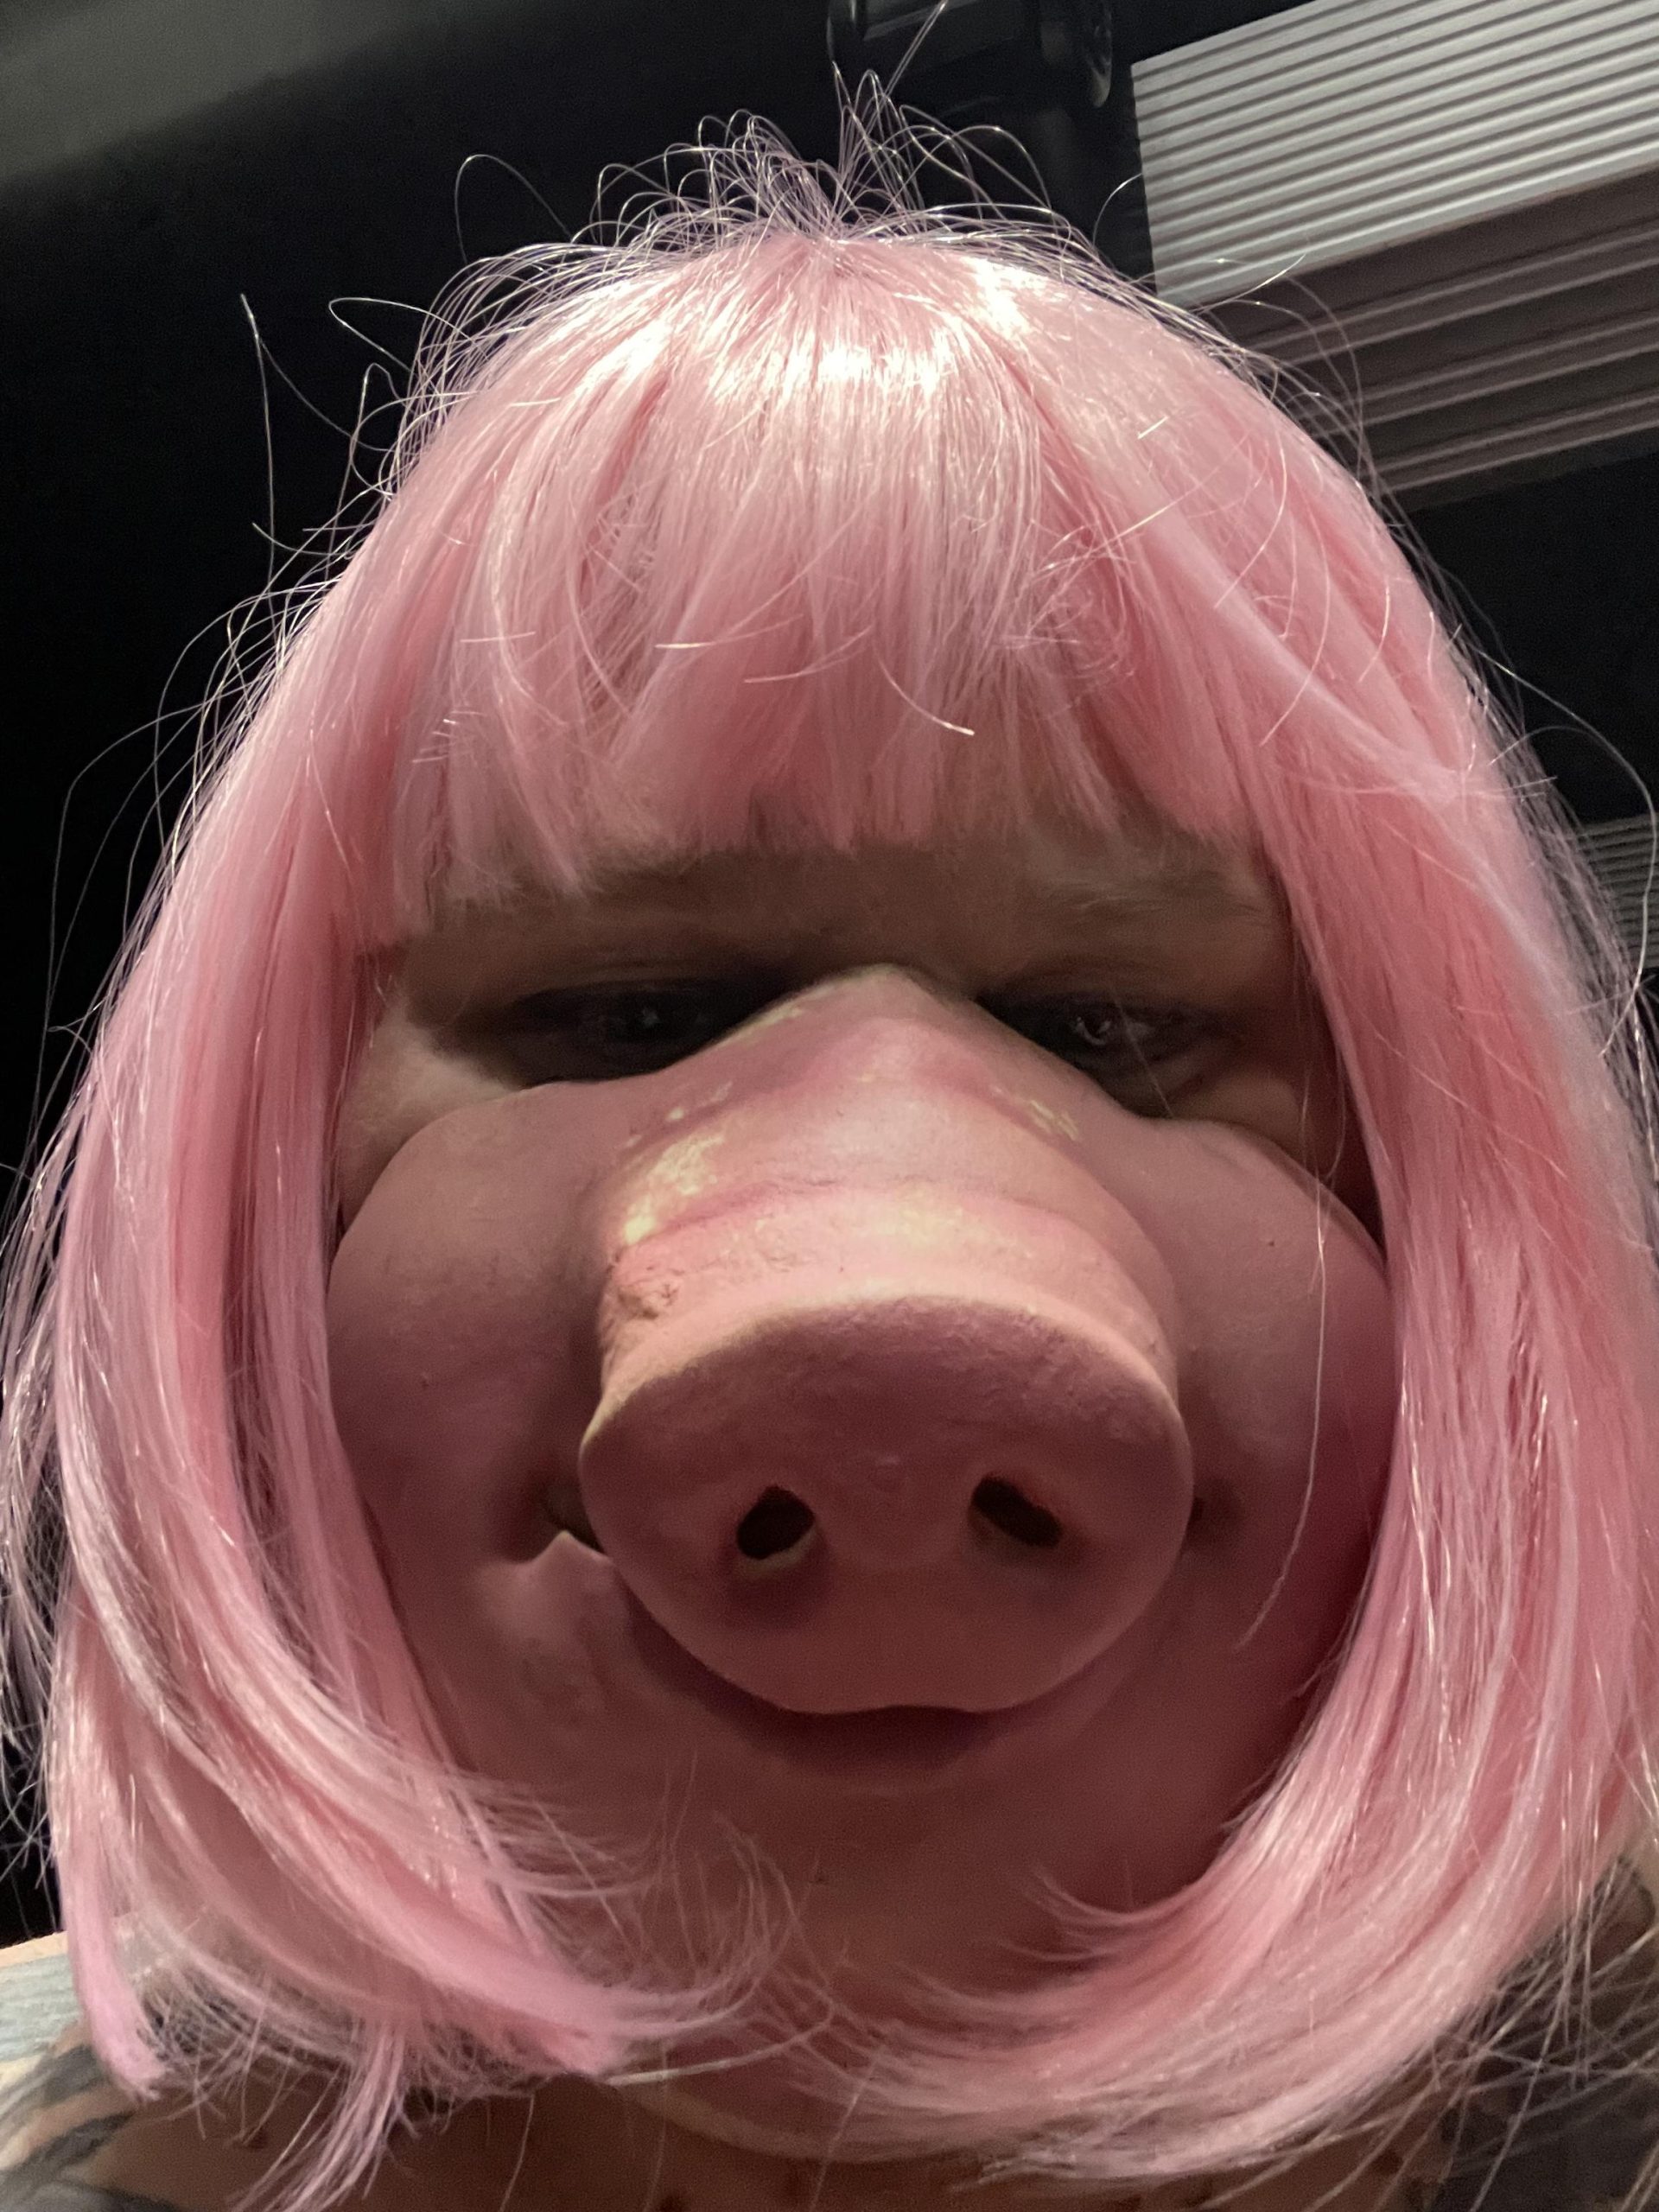 Bimbo pig sissy slut fat tranny loser